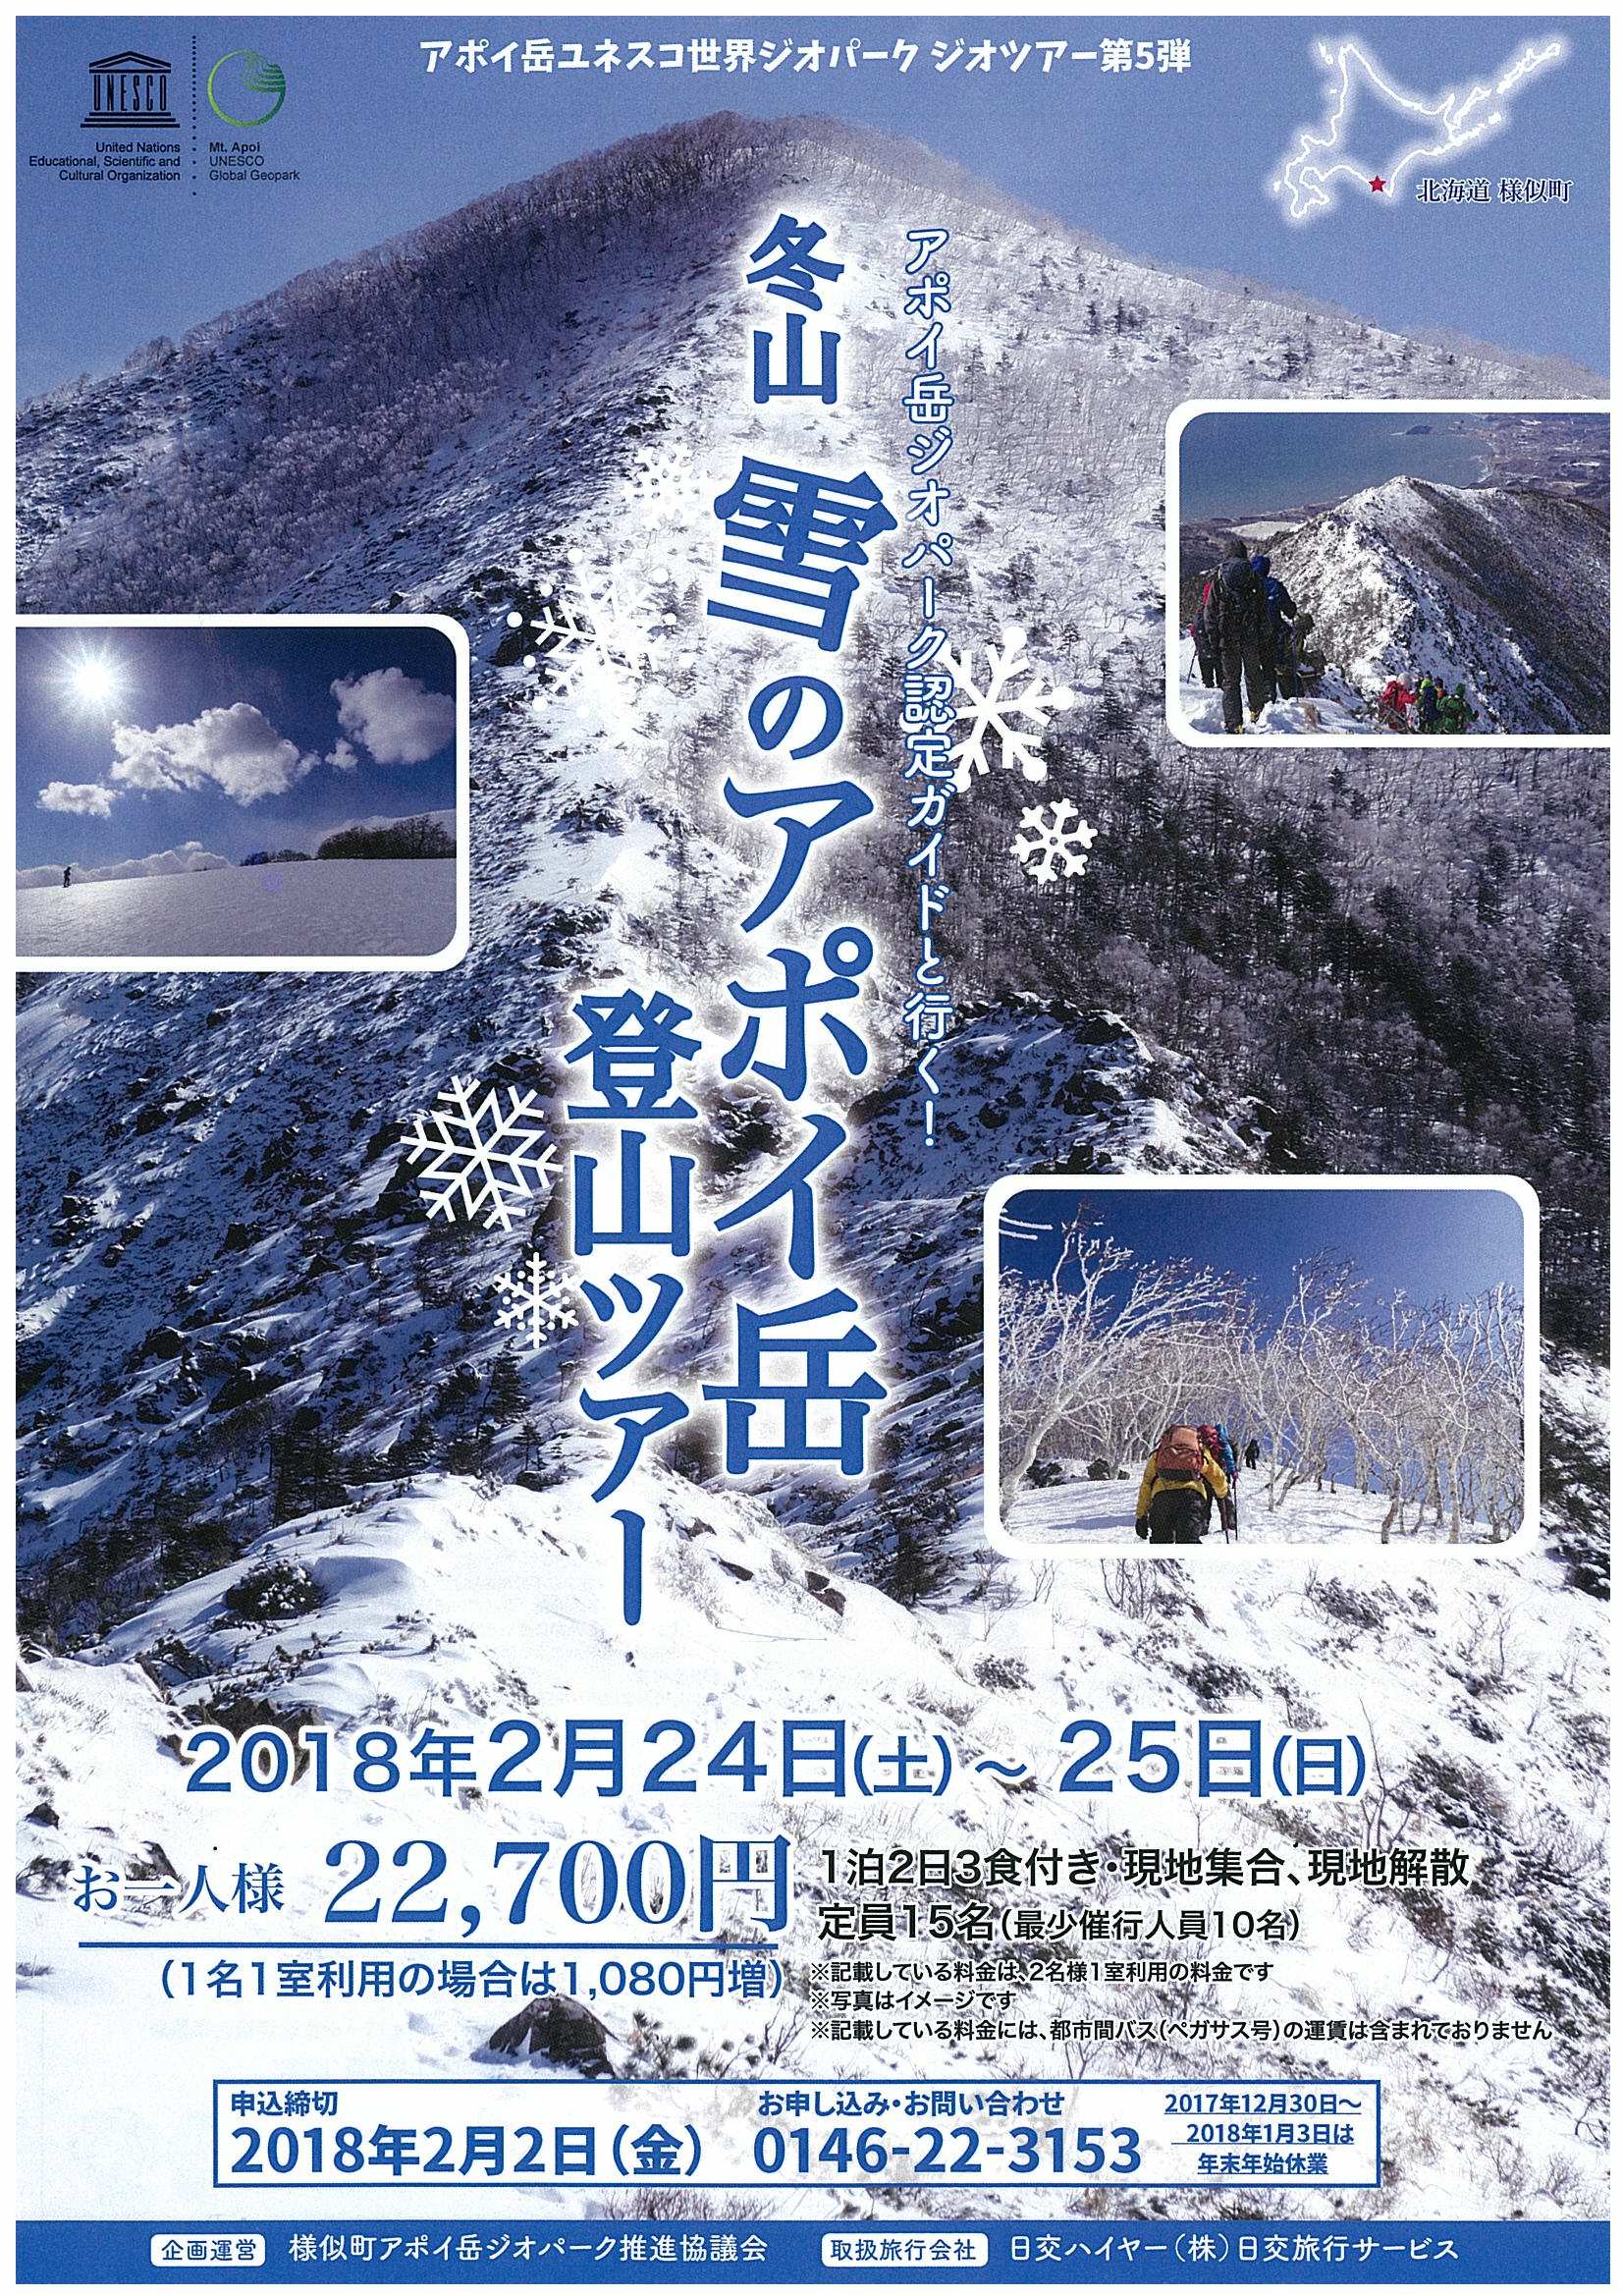 http://www.apoi-geopark.jp/event/1149.jpg